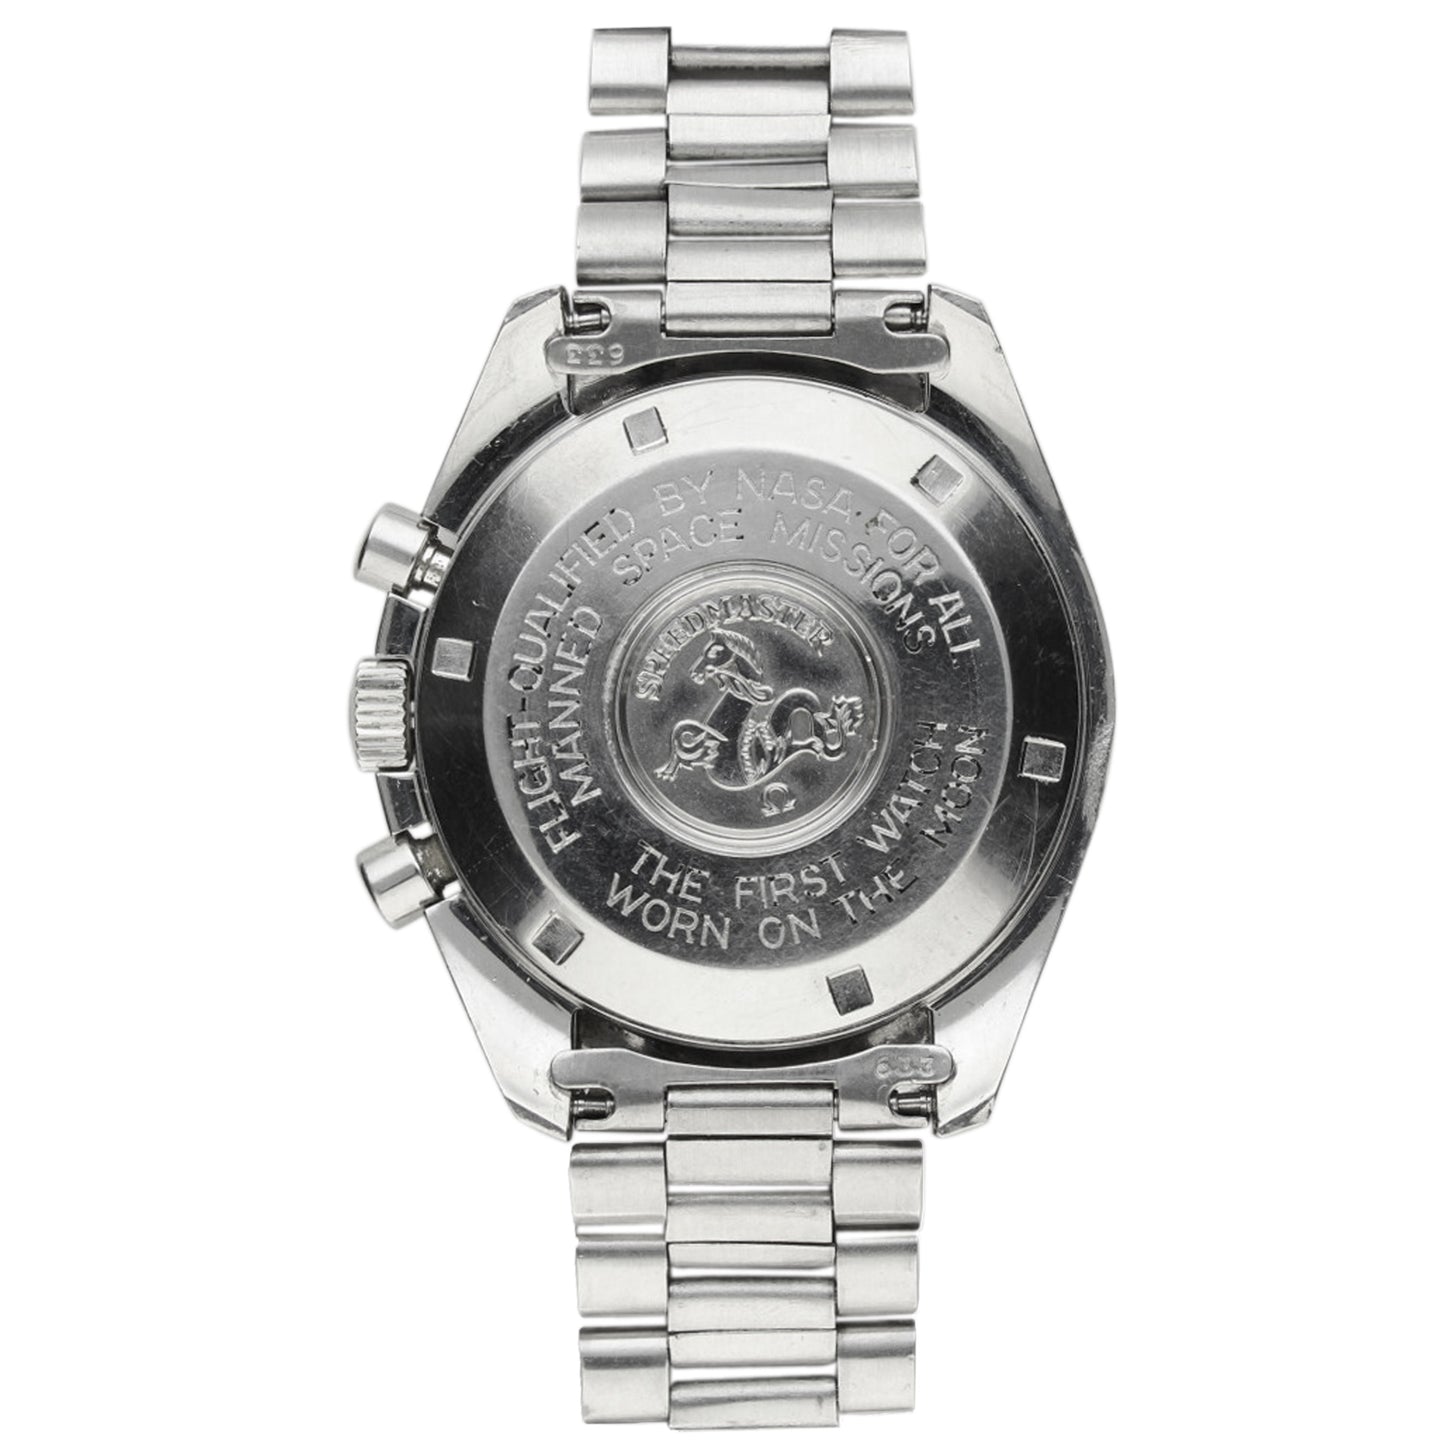 Stainless steel Speedmaster professional chronograph wristwatch. Made 1977